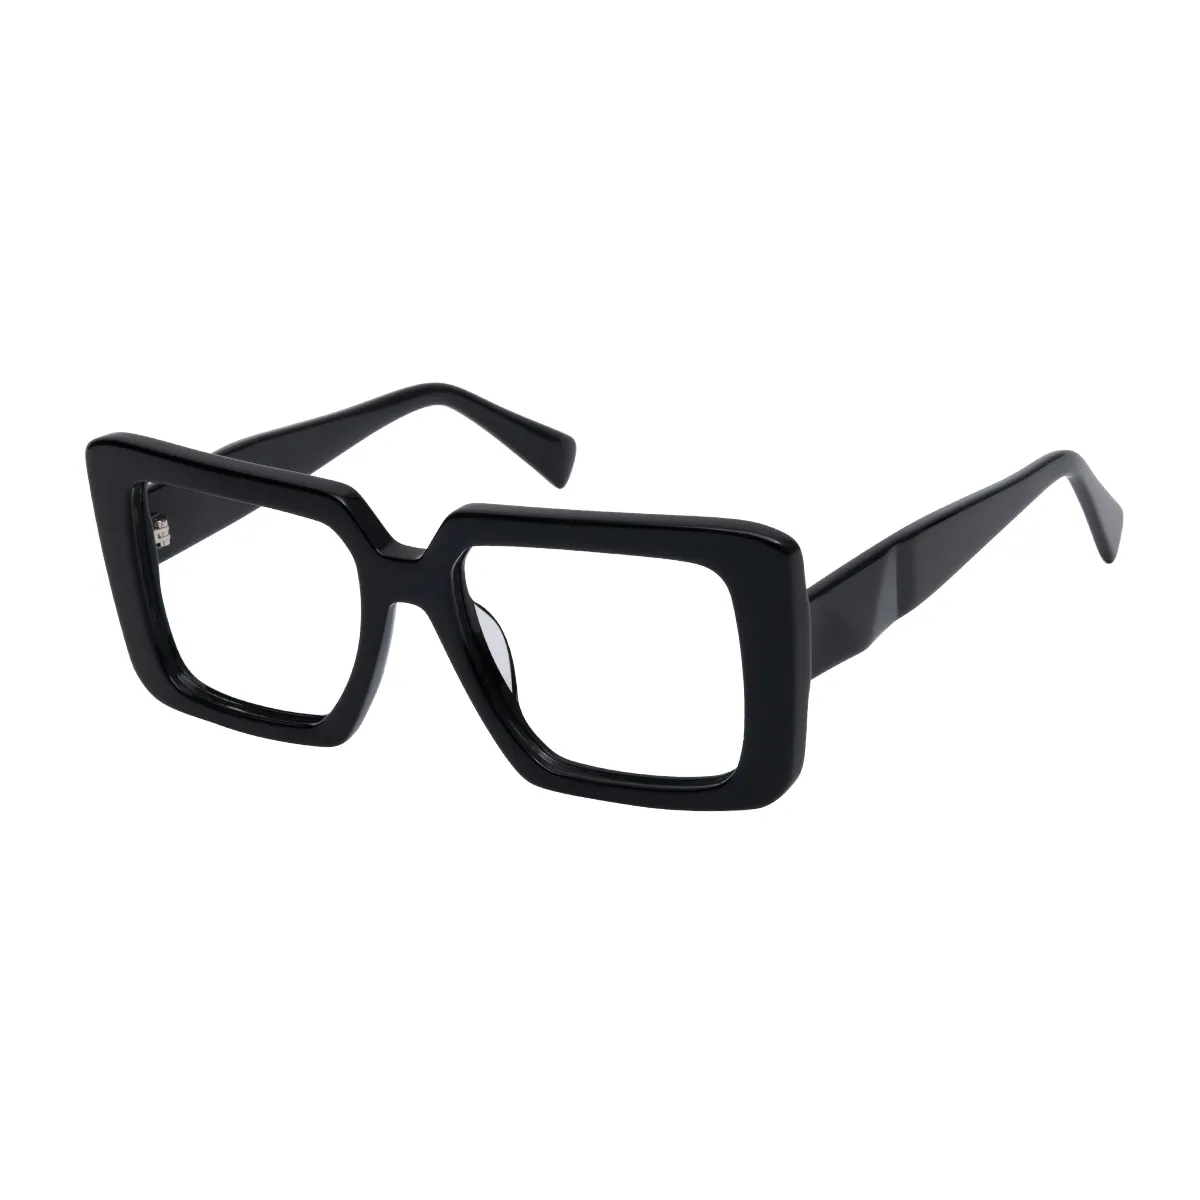 Figueroa - Square Black Glasses for Women